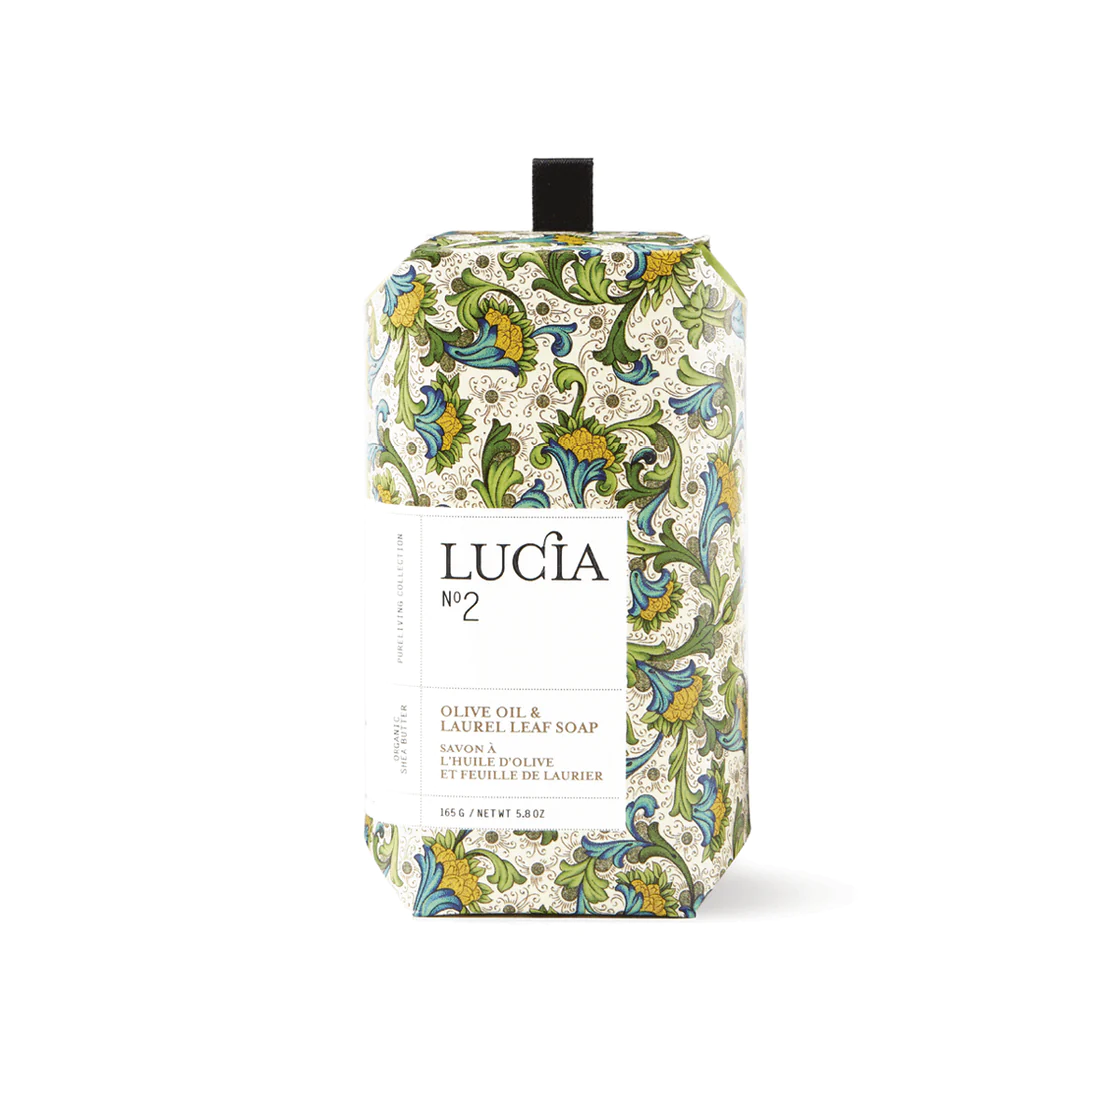 lucia olive oil and laurel leaf soap